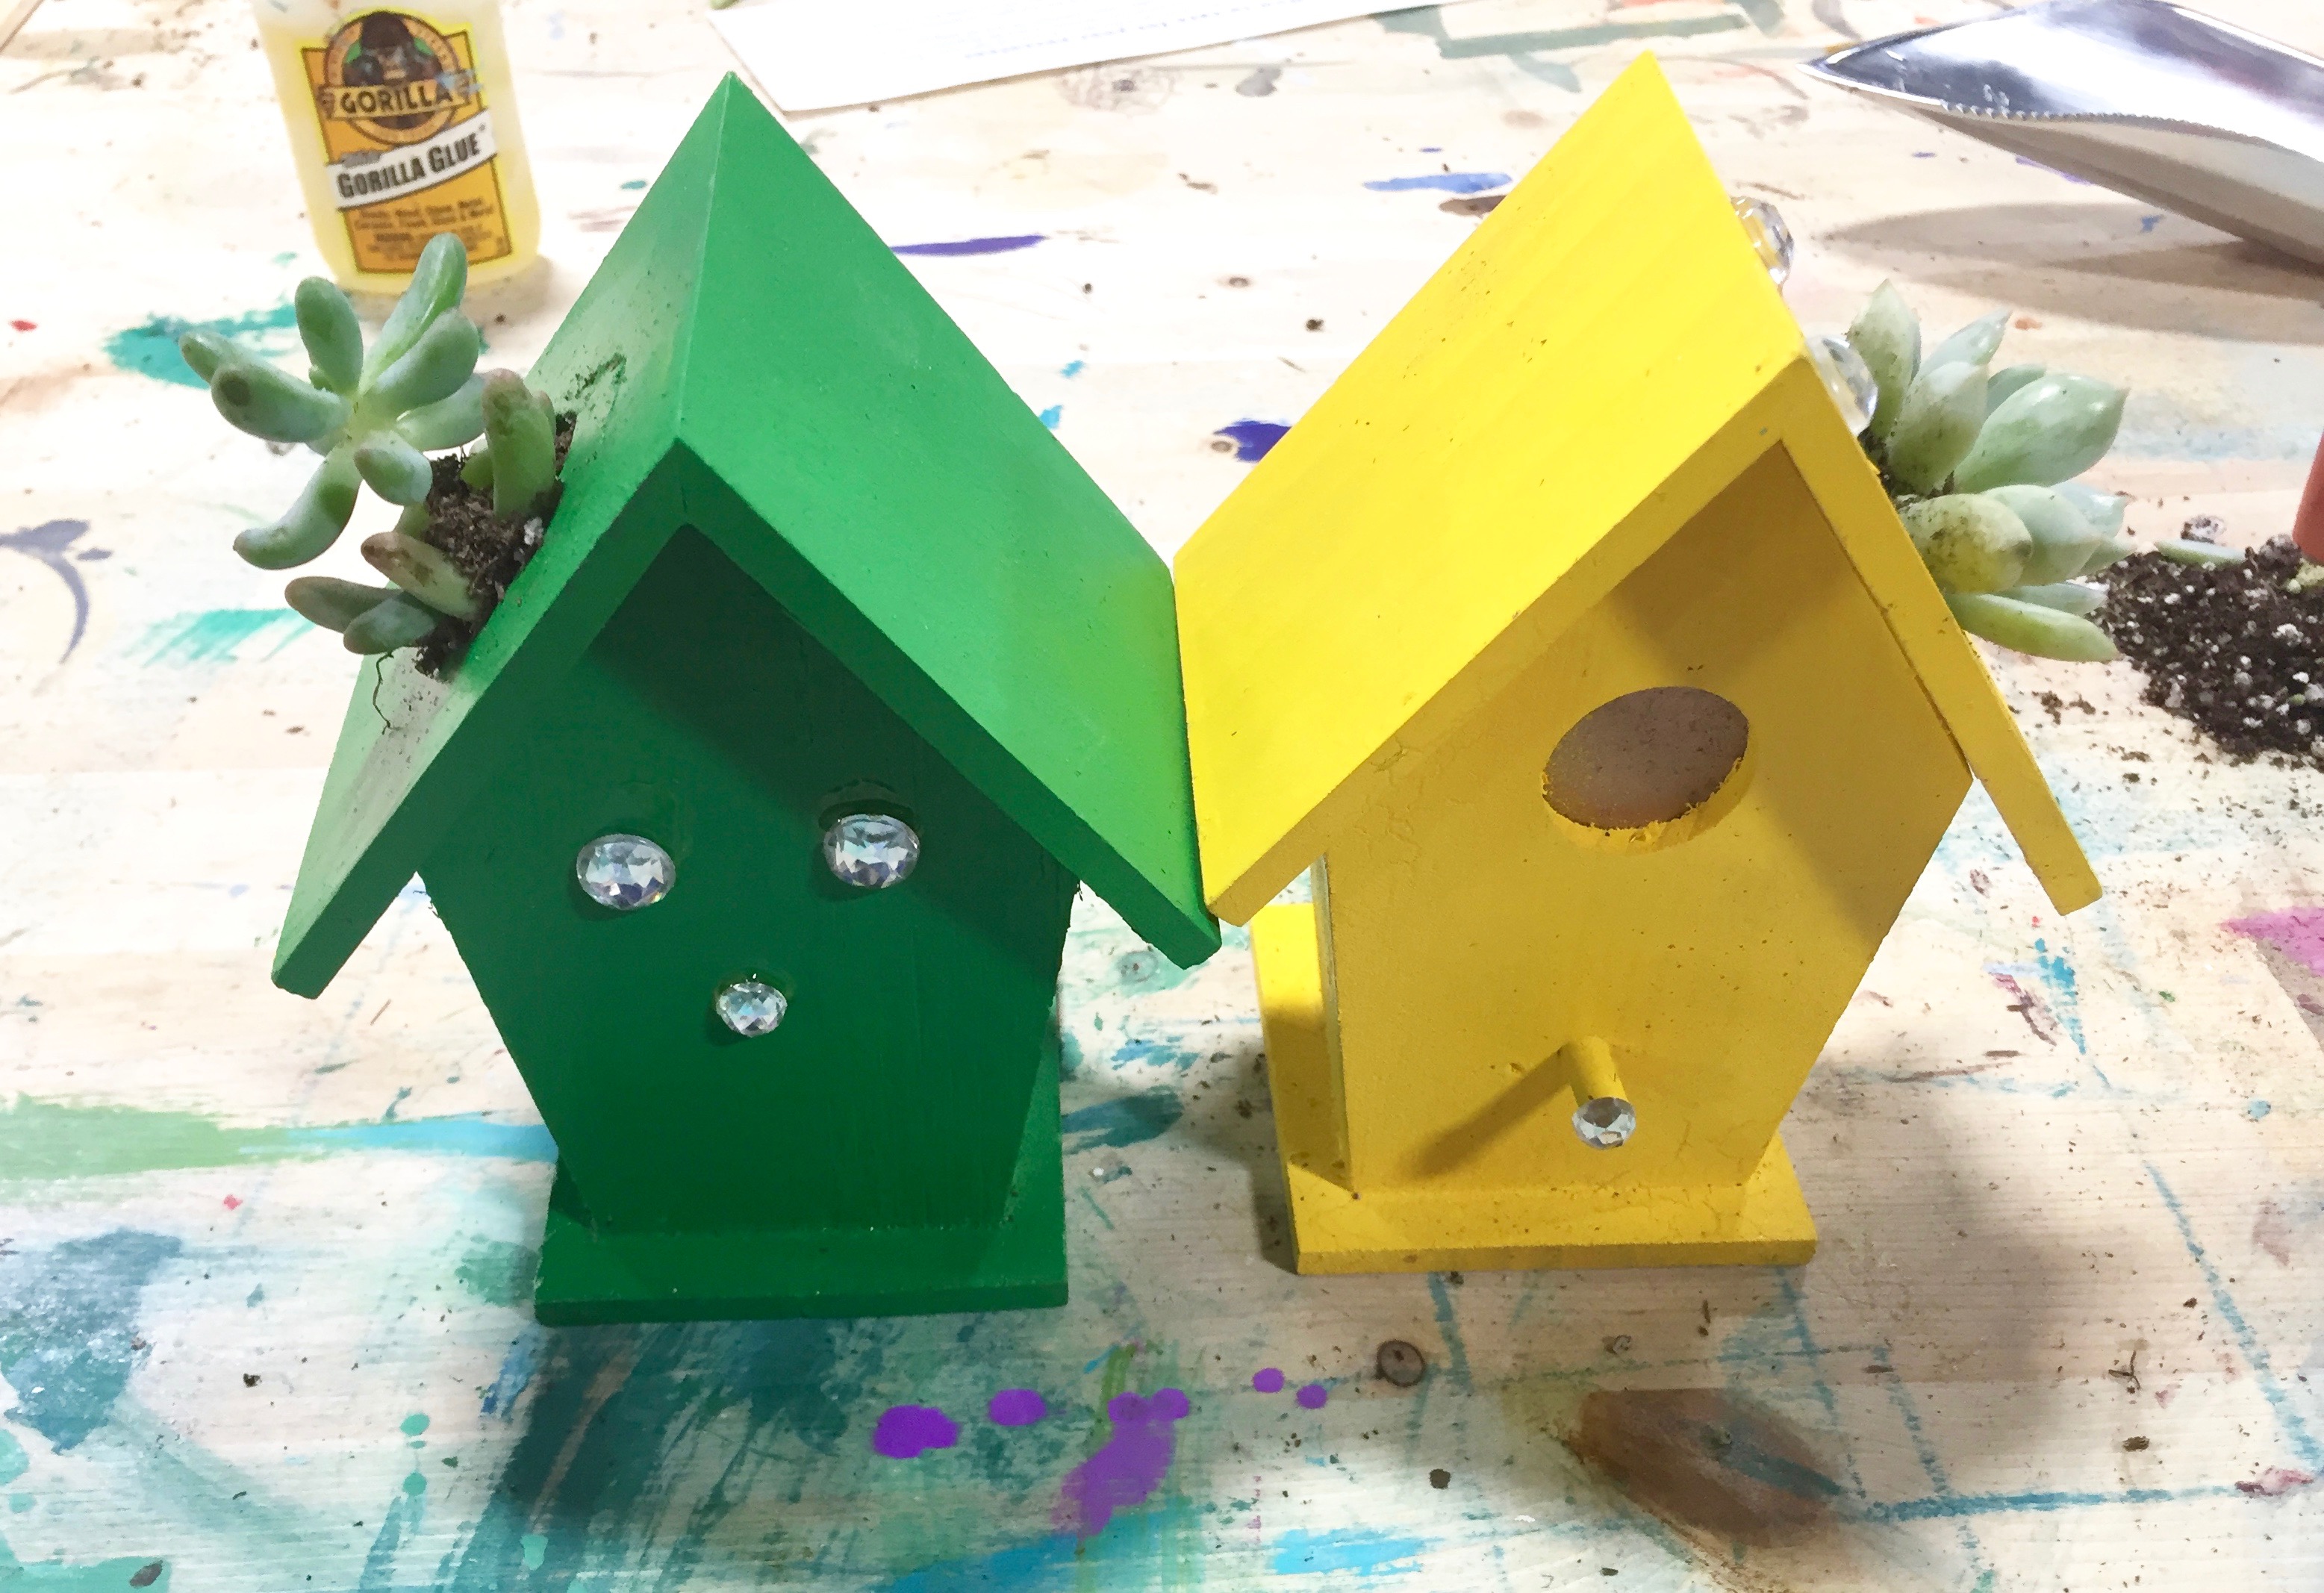 Z Birdhouse succulent craft myfixituplife workshop home show event green yellow